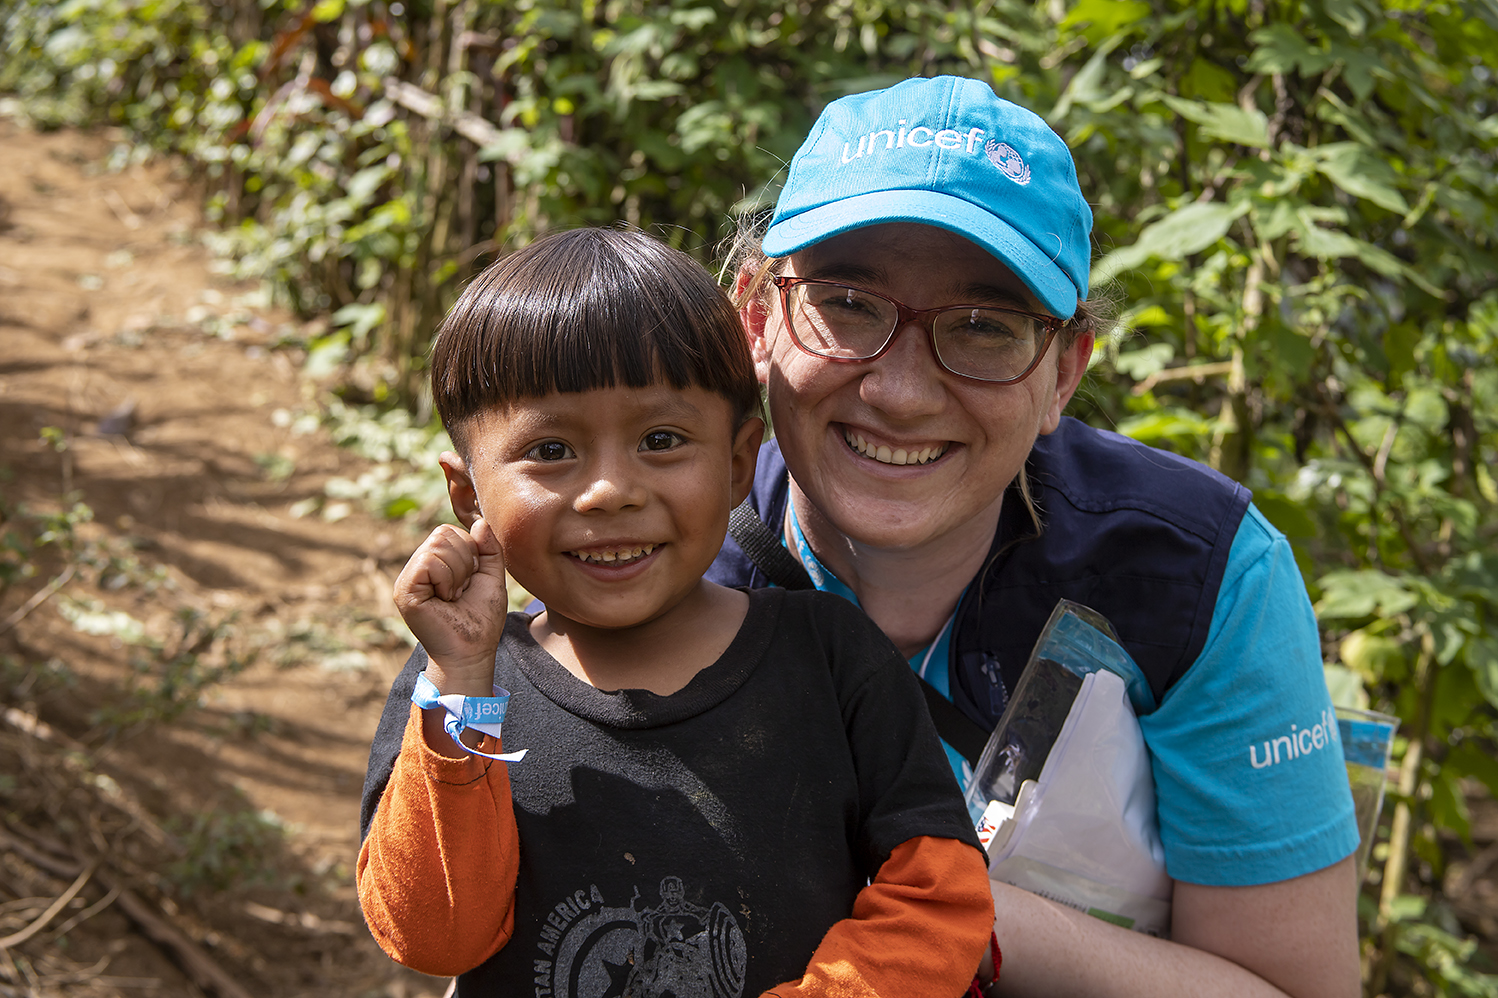 Paola Baldizon, Communication Consultant at UNICEF Guatemala, with Herson, 4, in San Cristobal, Alta Verapaz, Guatemala on Feb. 27, 2022.